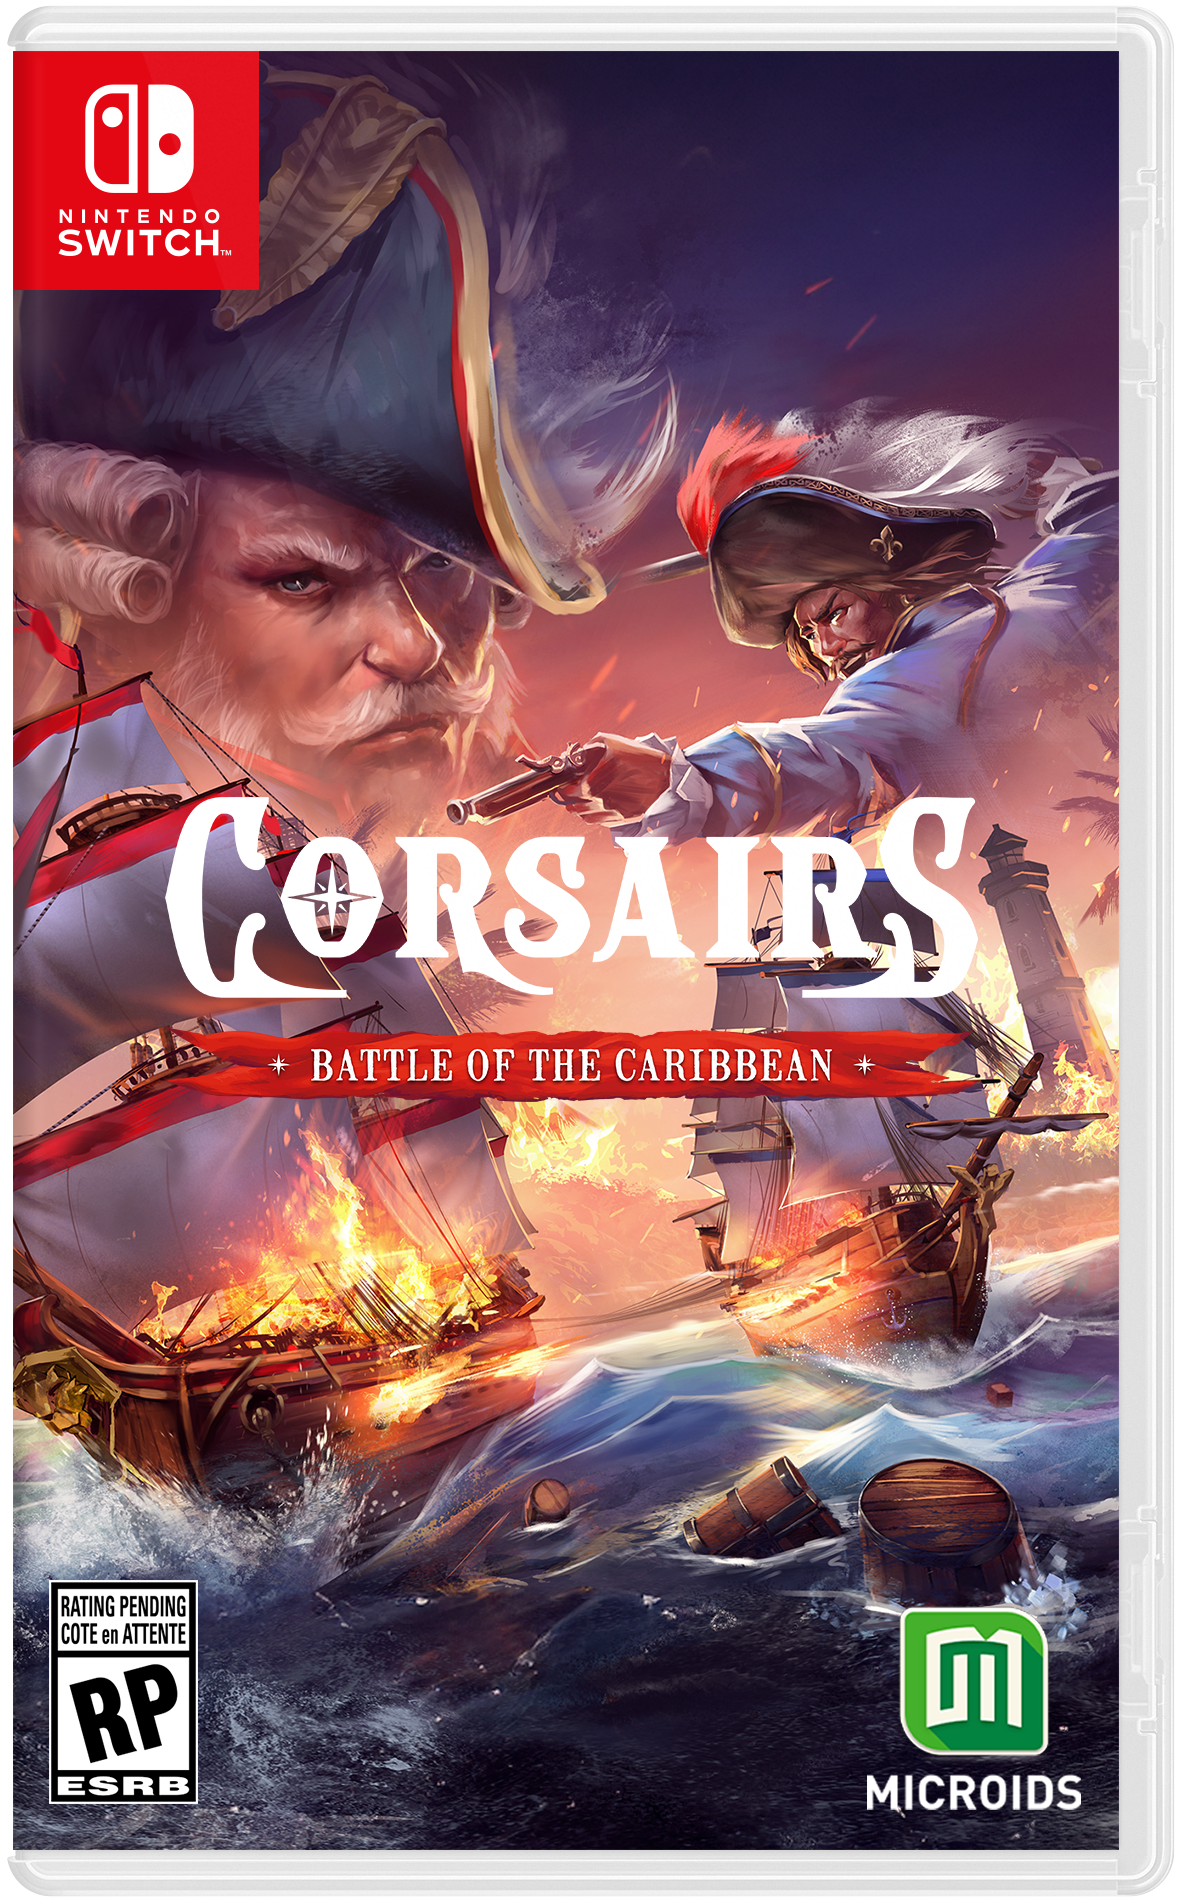 Corsairs: Battle of the Caribbean